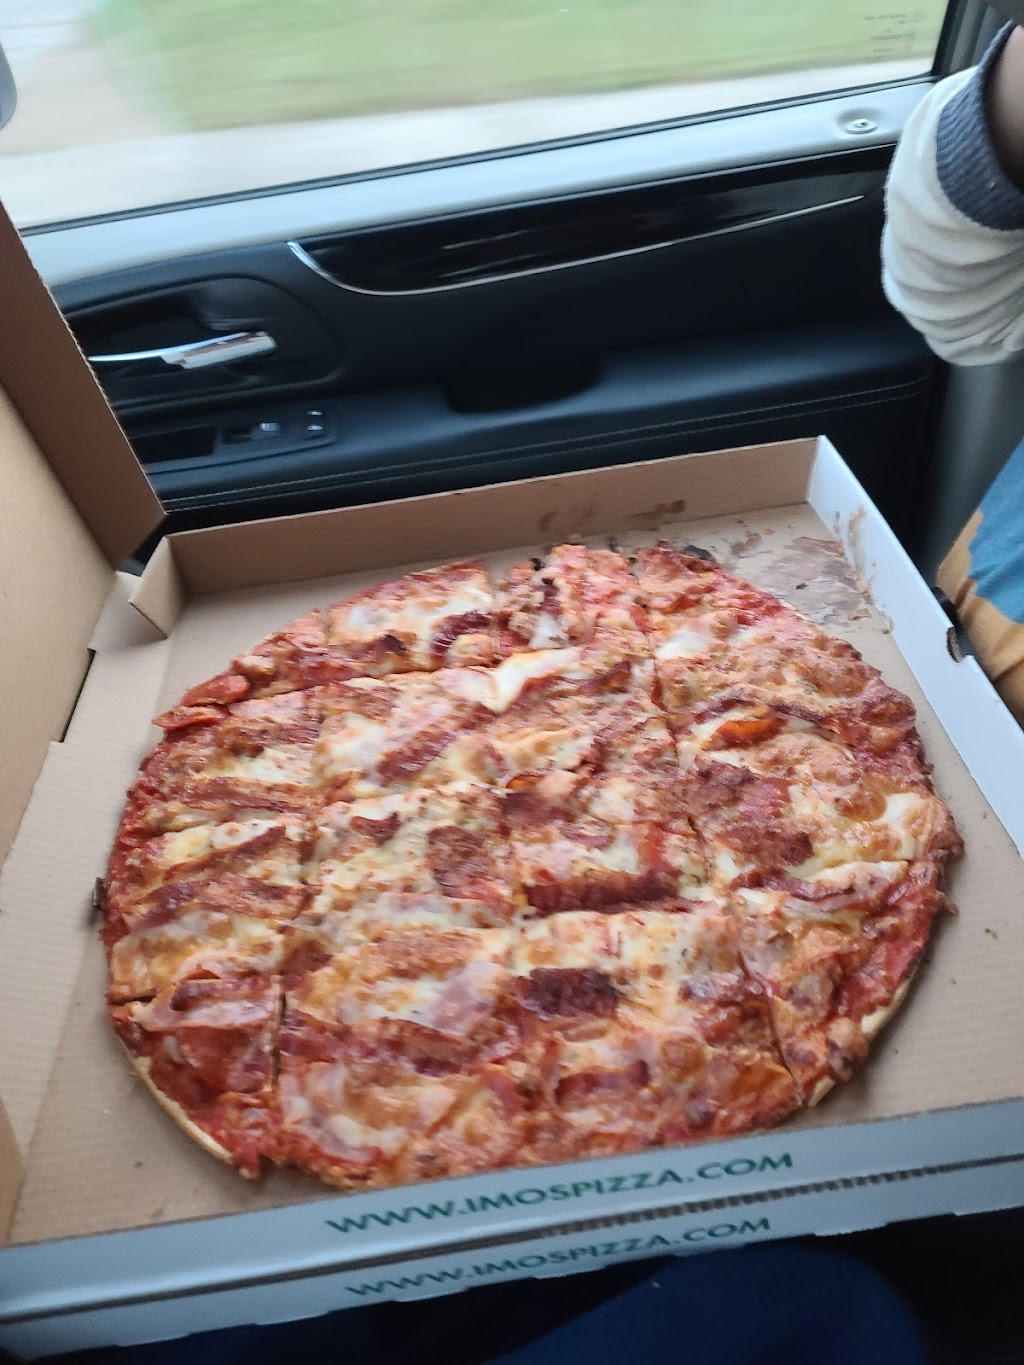 Imos Pizza | 13015 Tesson Ferry Rd, St. Louis, MO 63128, USA | Phone: (314) 842-3868